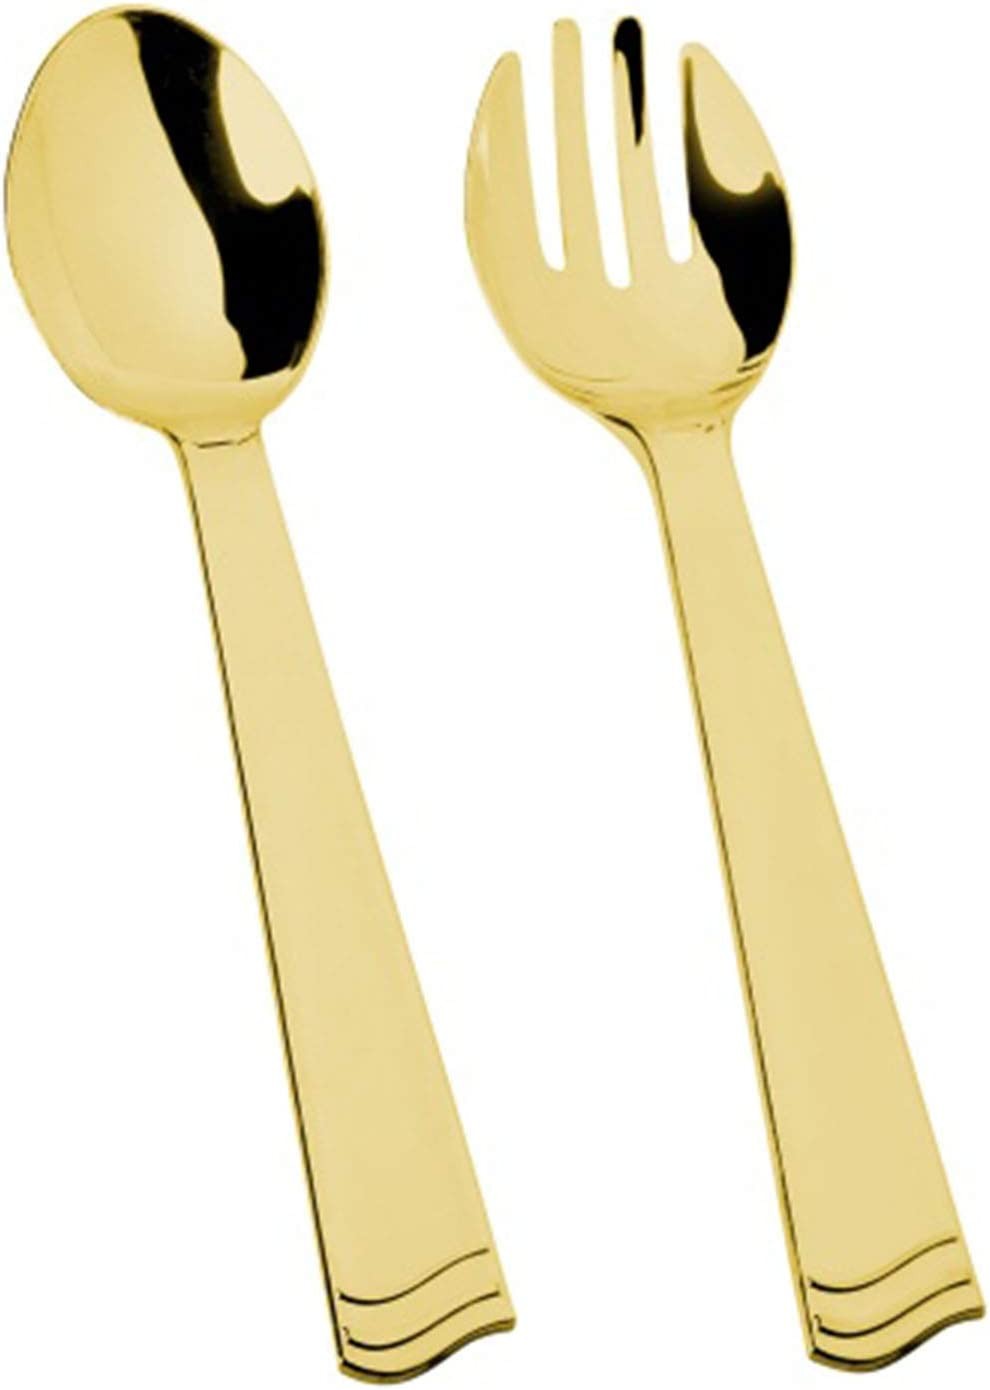 TigerChef Gold Heavy Duty Disposable Plastic Serving Spoon/Fork Set, 6 Sets